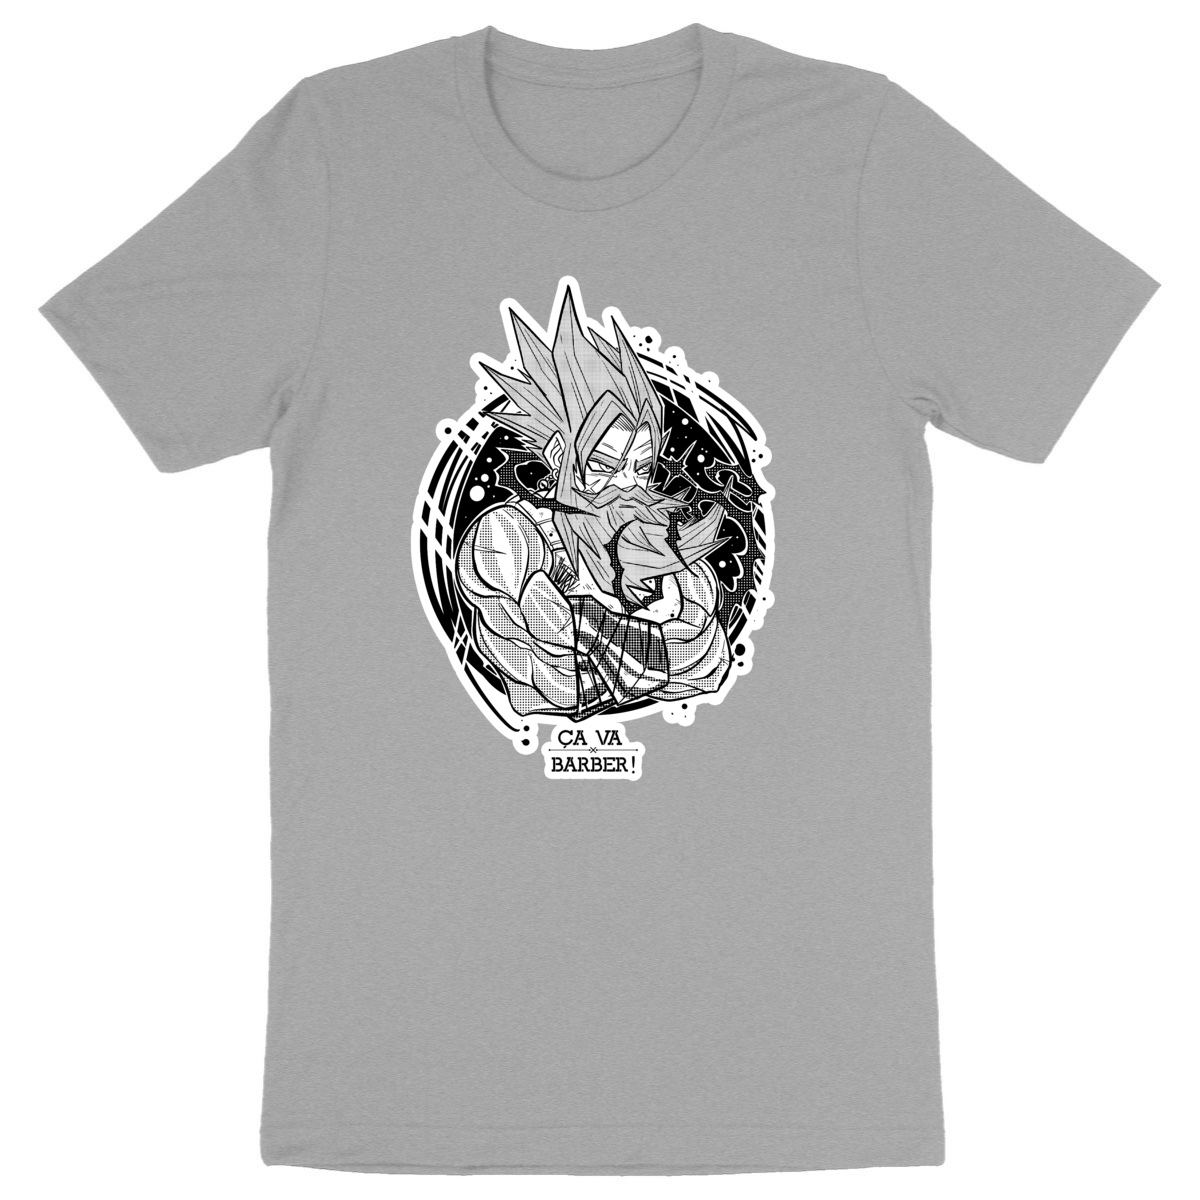 T-shirt "Dragon Barbe Z"